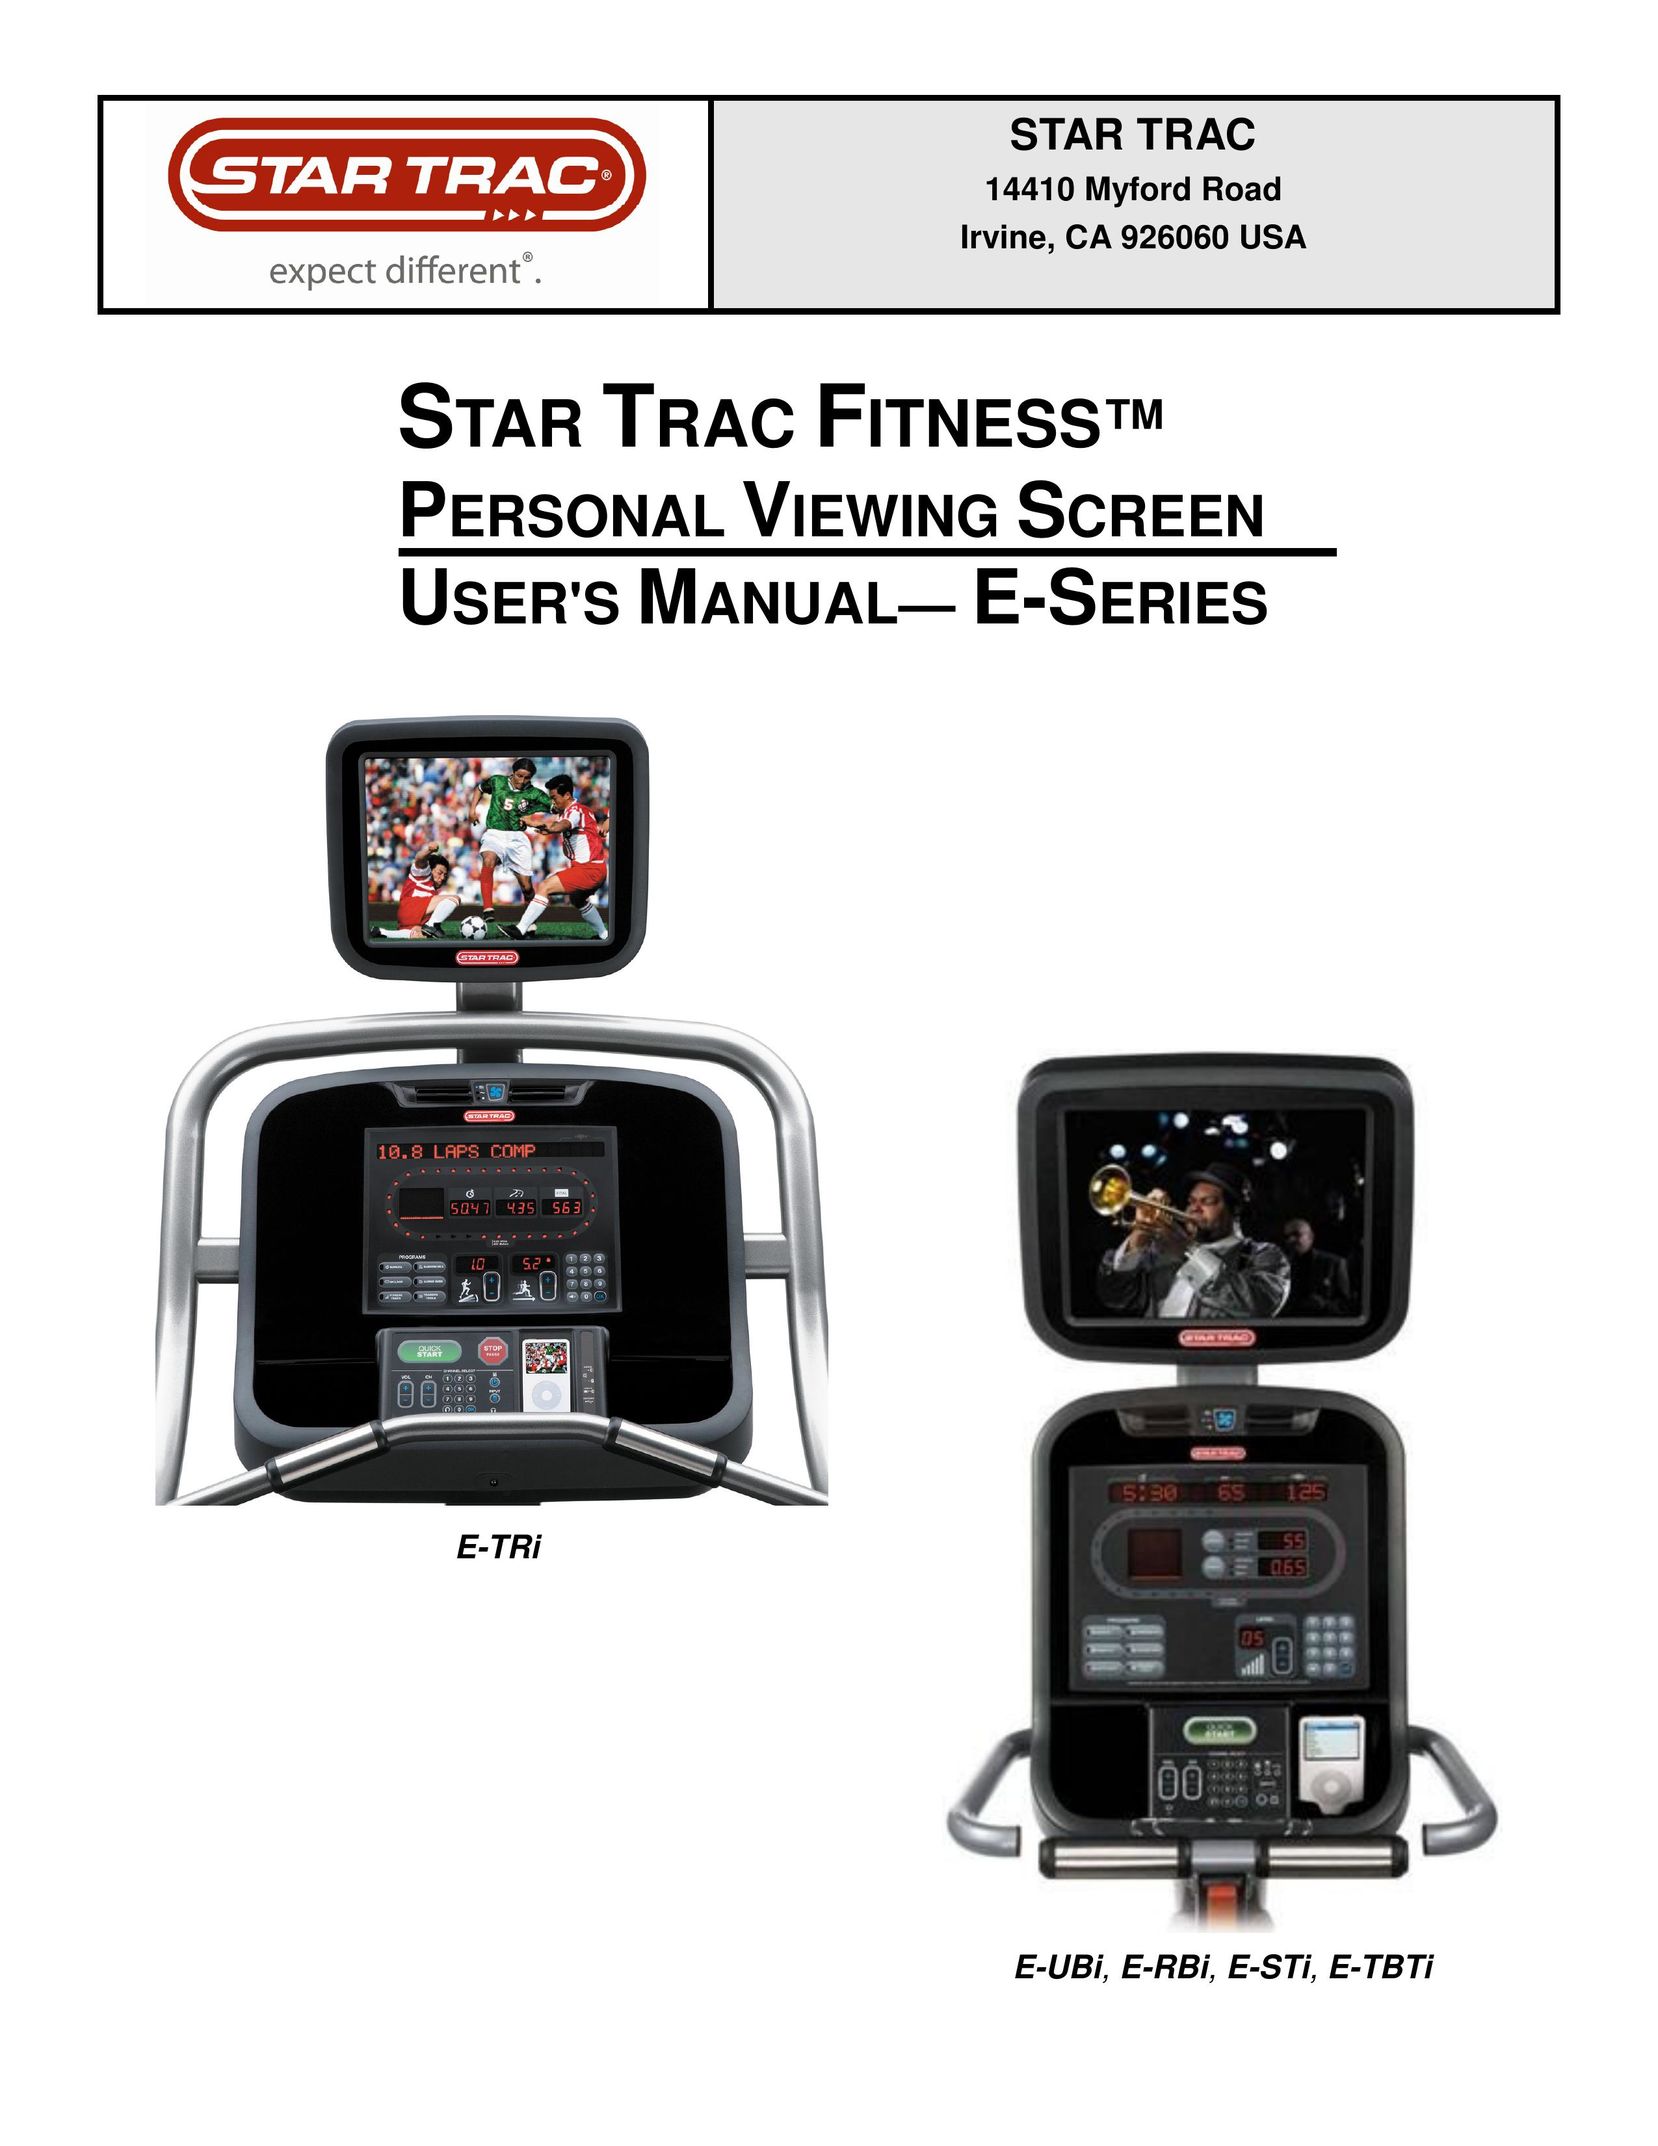 Star Trac E-UBI Fitness Electronics User Manual